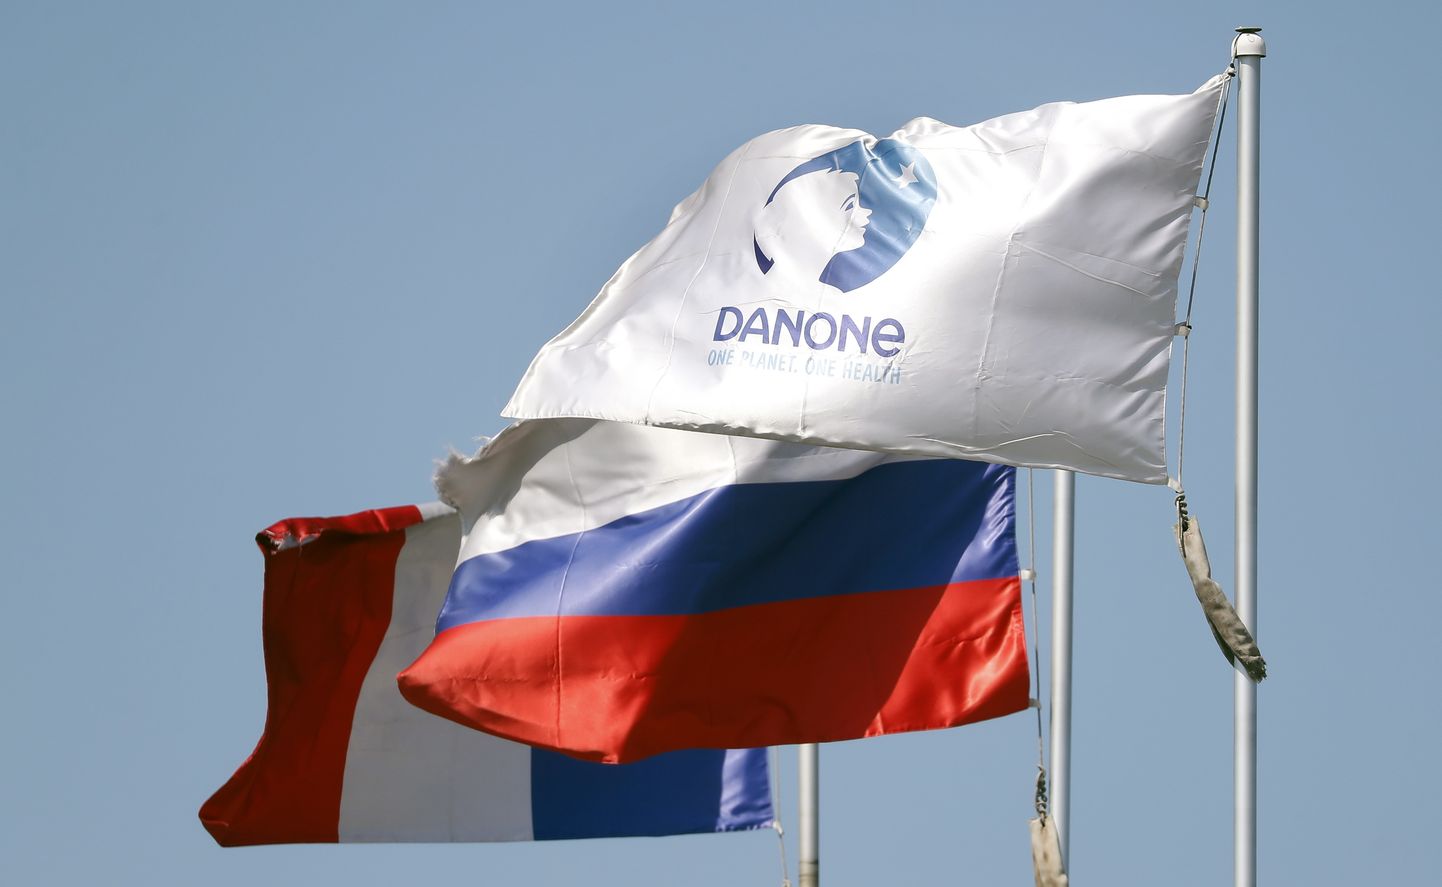 Danone'i tehas Tšehhovis, Venemaal.